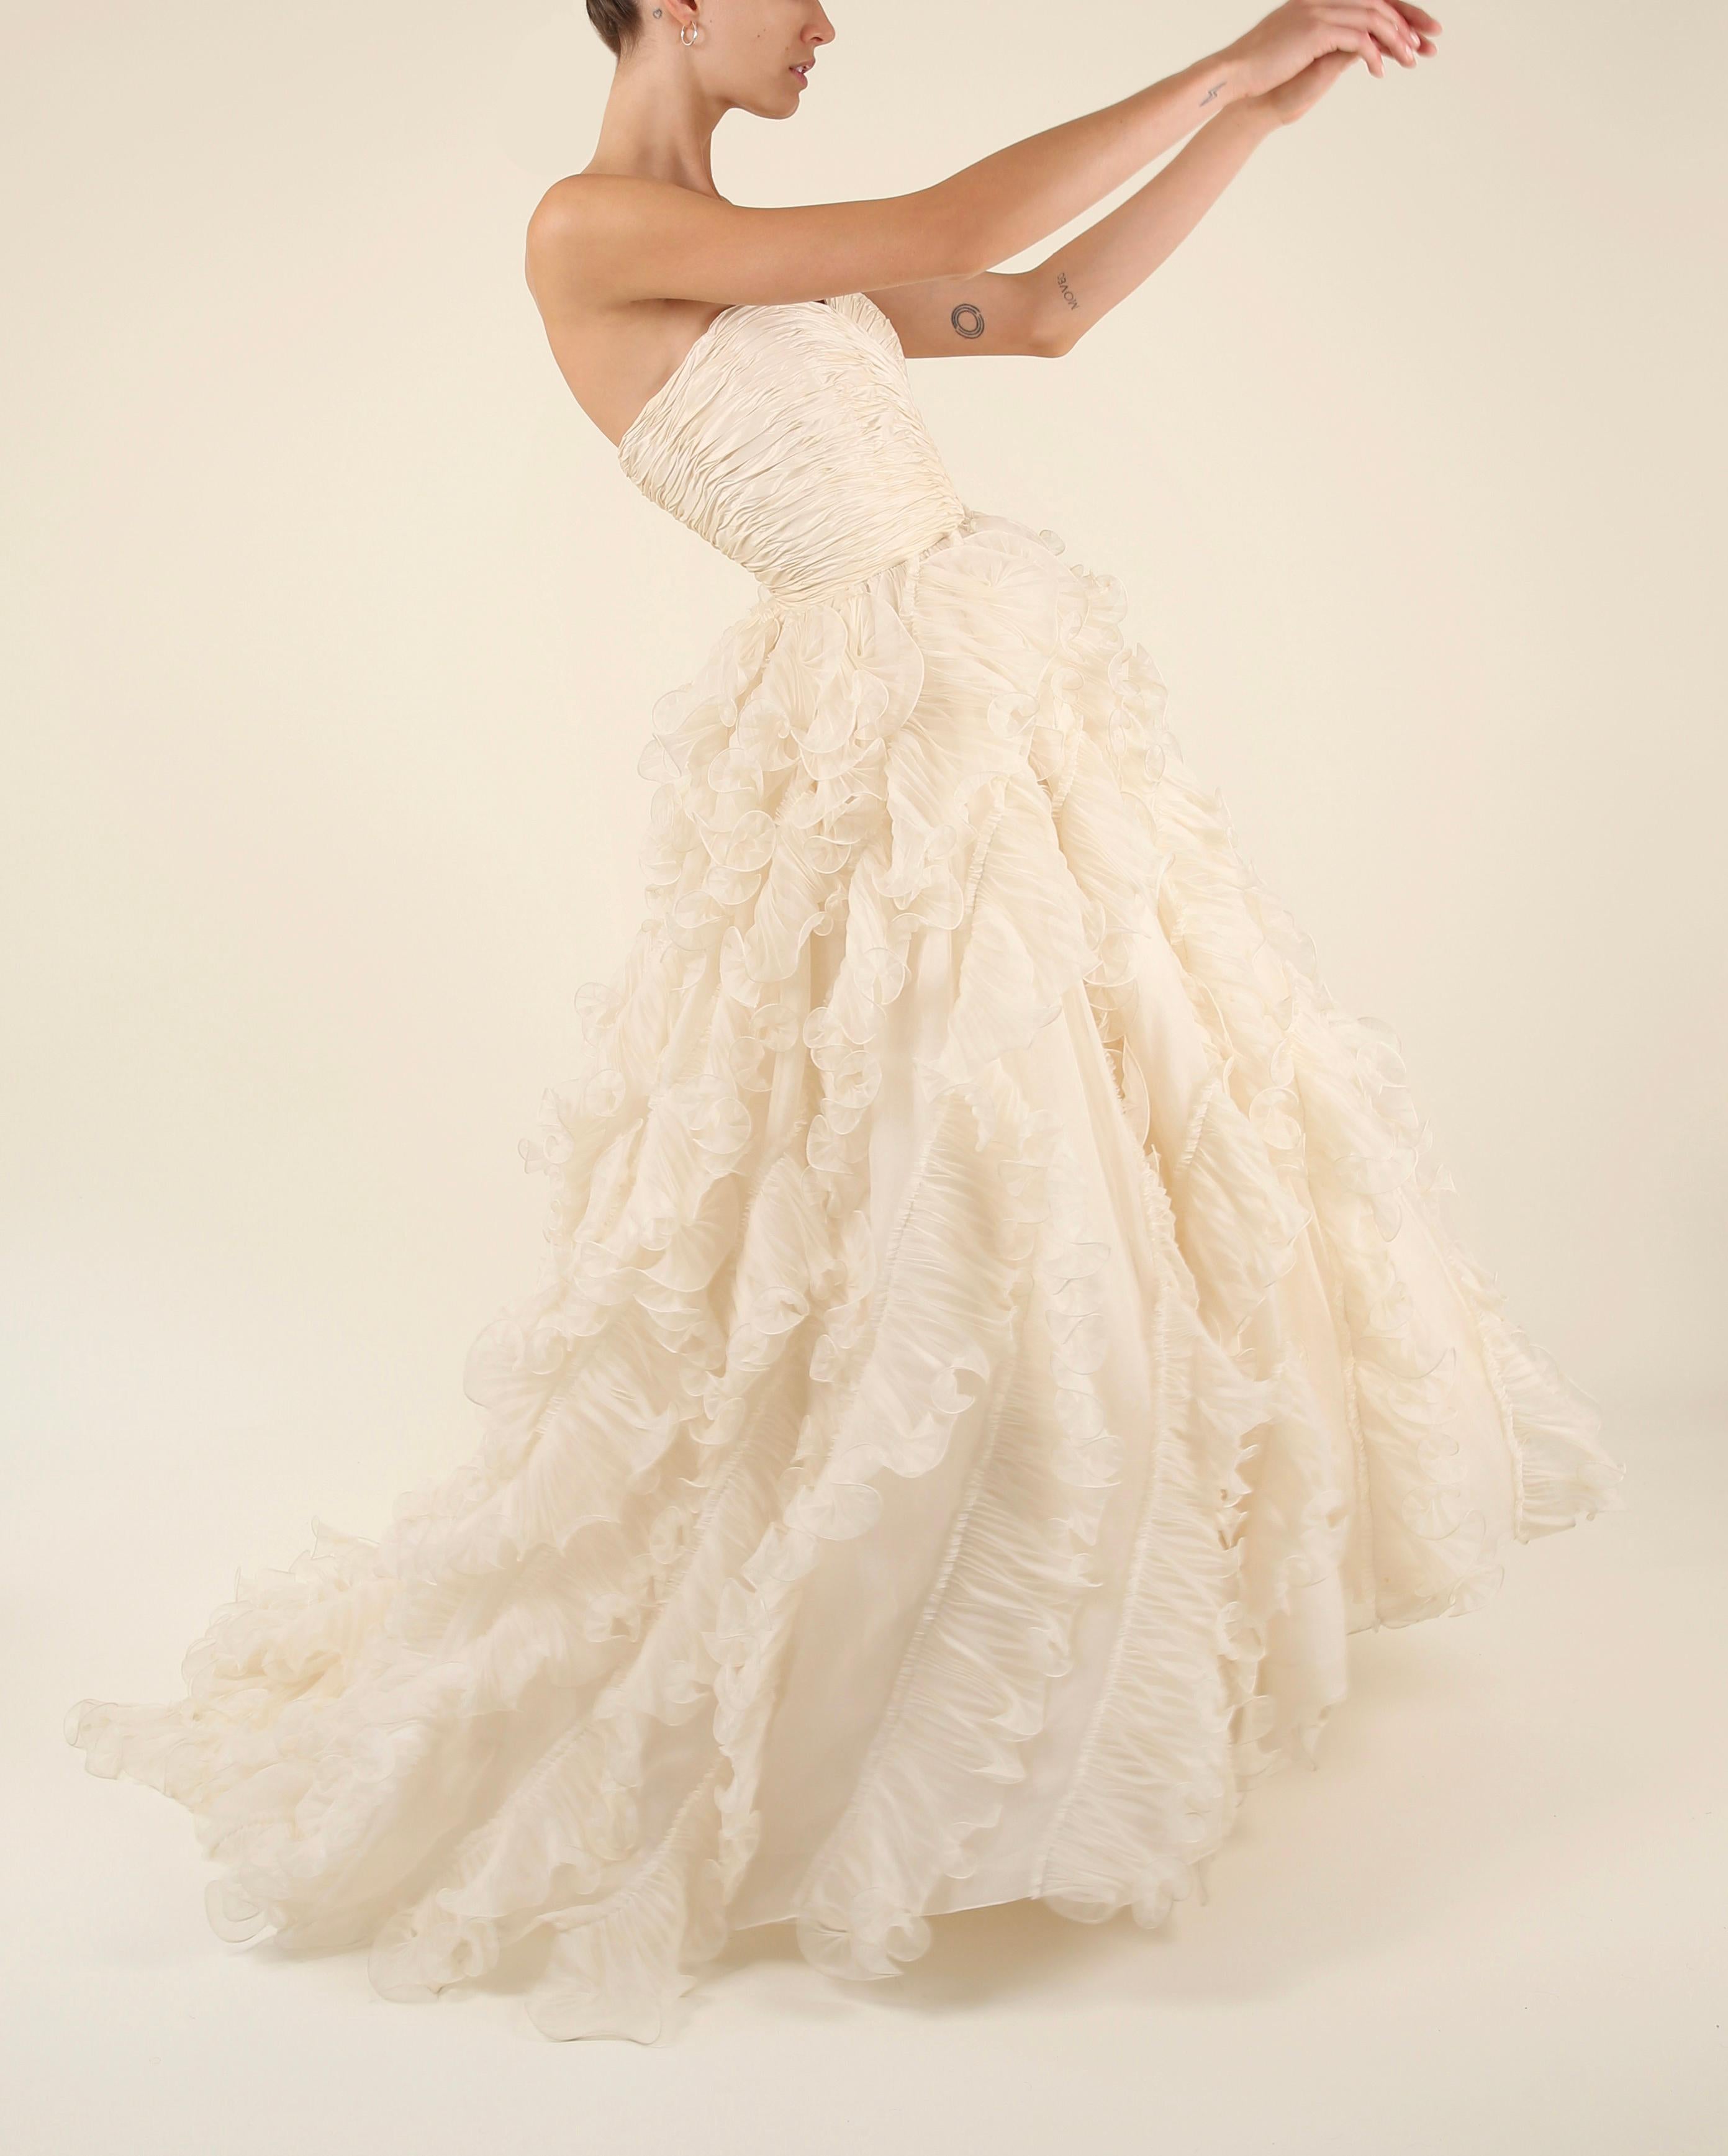 Oscar de la Renta S/S08 bridal ivory strapless vintage ruffle wedding dress gown For Sale 6